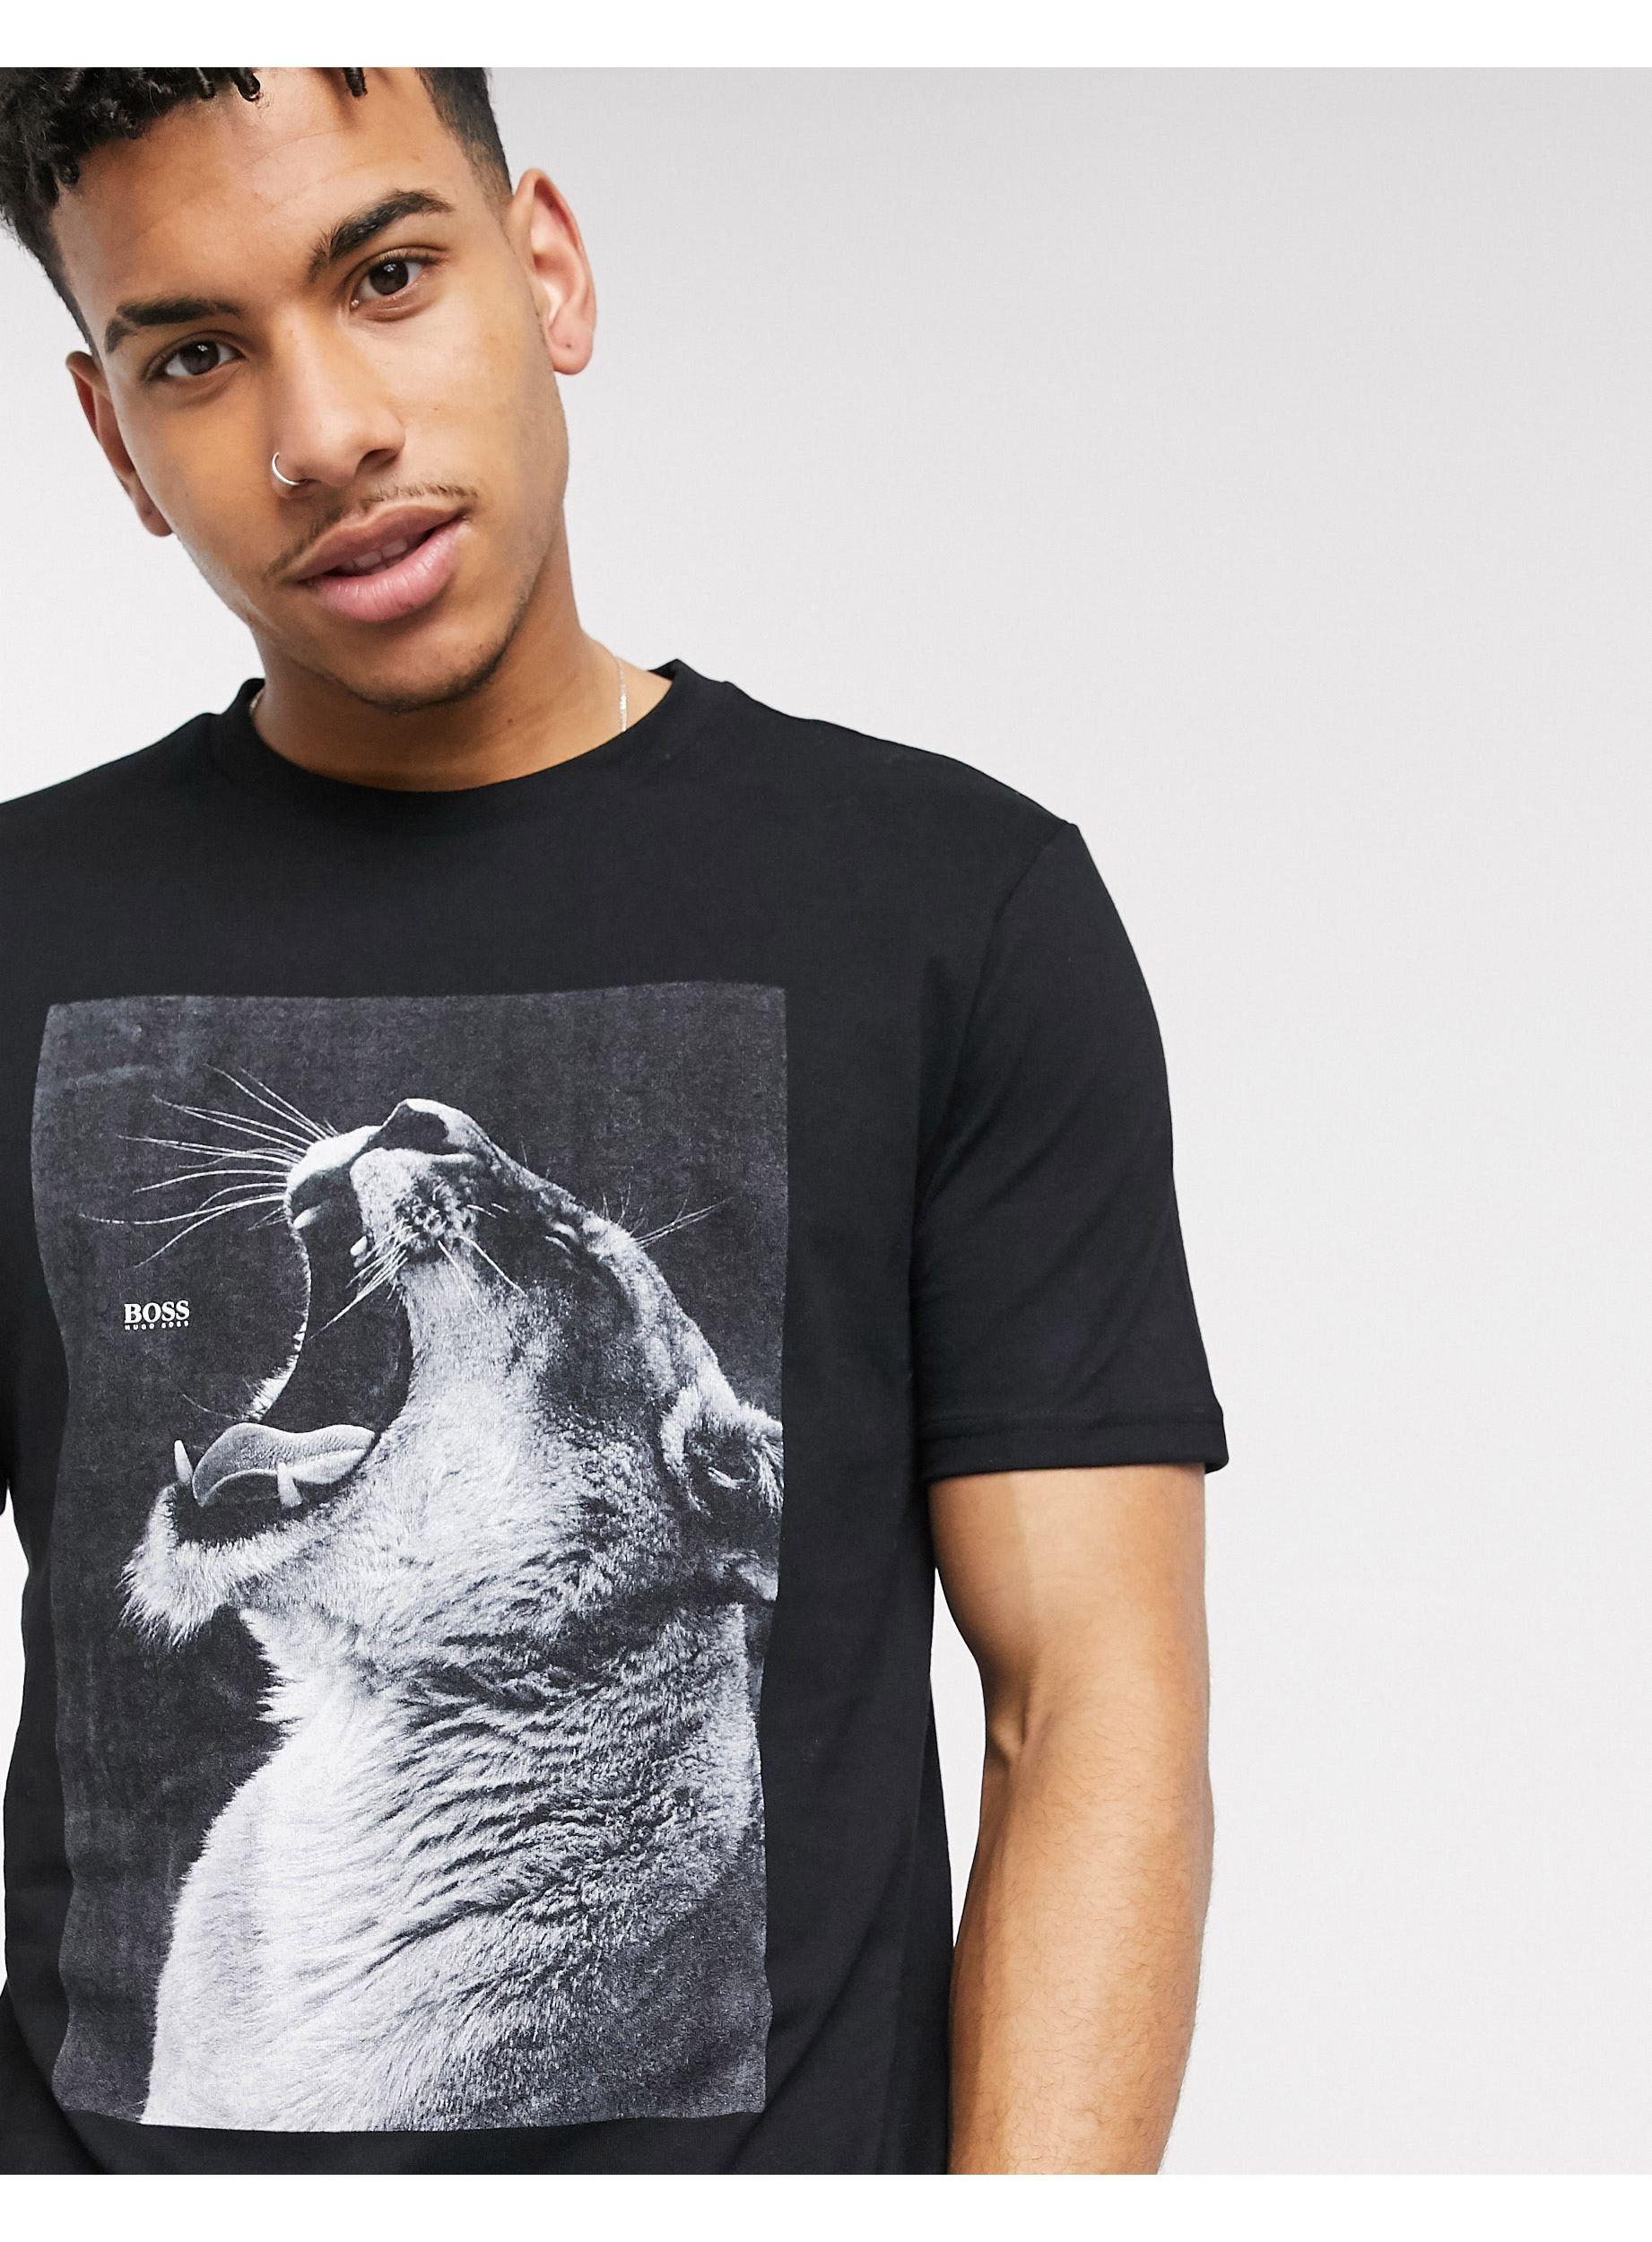 BOSS by HUGO BOSS Troaar 2 Lion Print T-shirt in Black for Men | Lyst UK